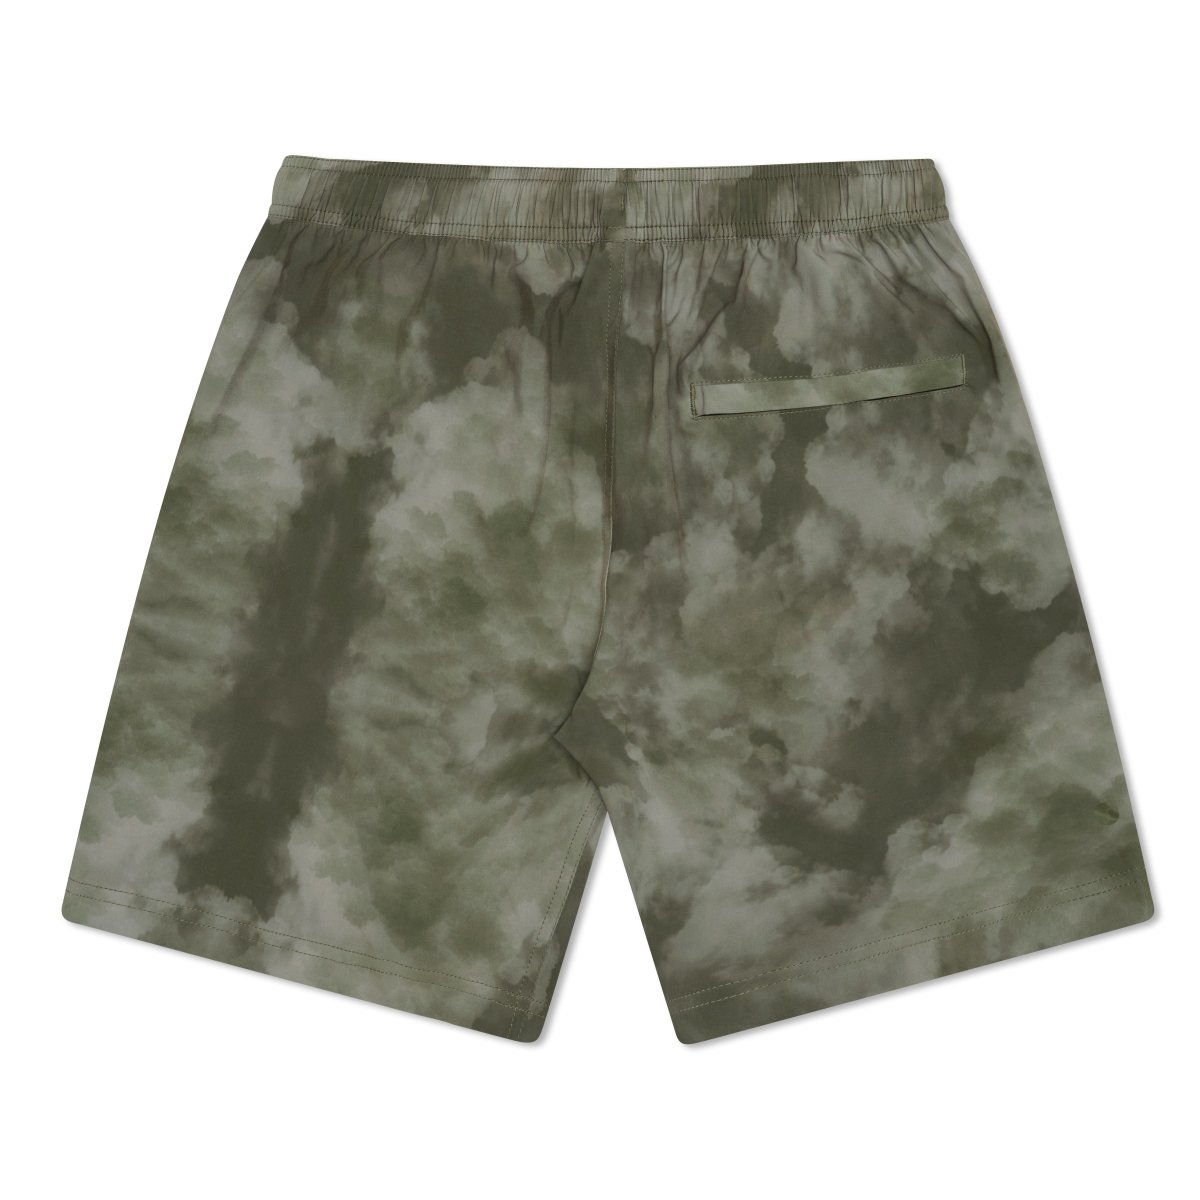 Collard Greens 5” - Green Tie Dye Shorts - Bamboo Ave. - Men's Shorts